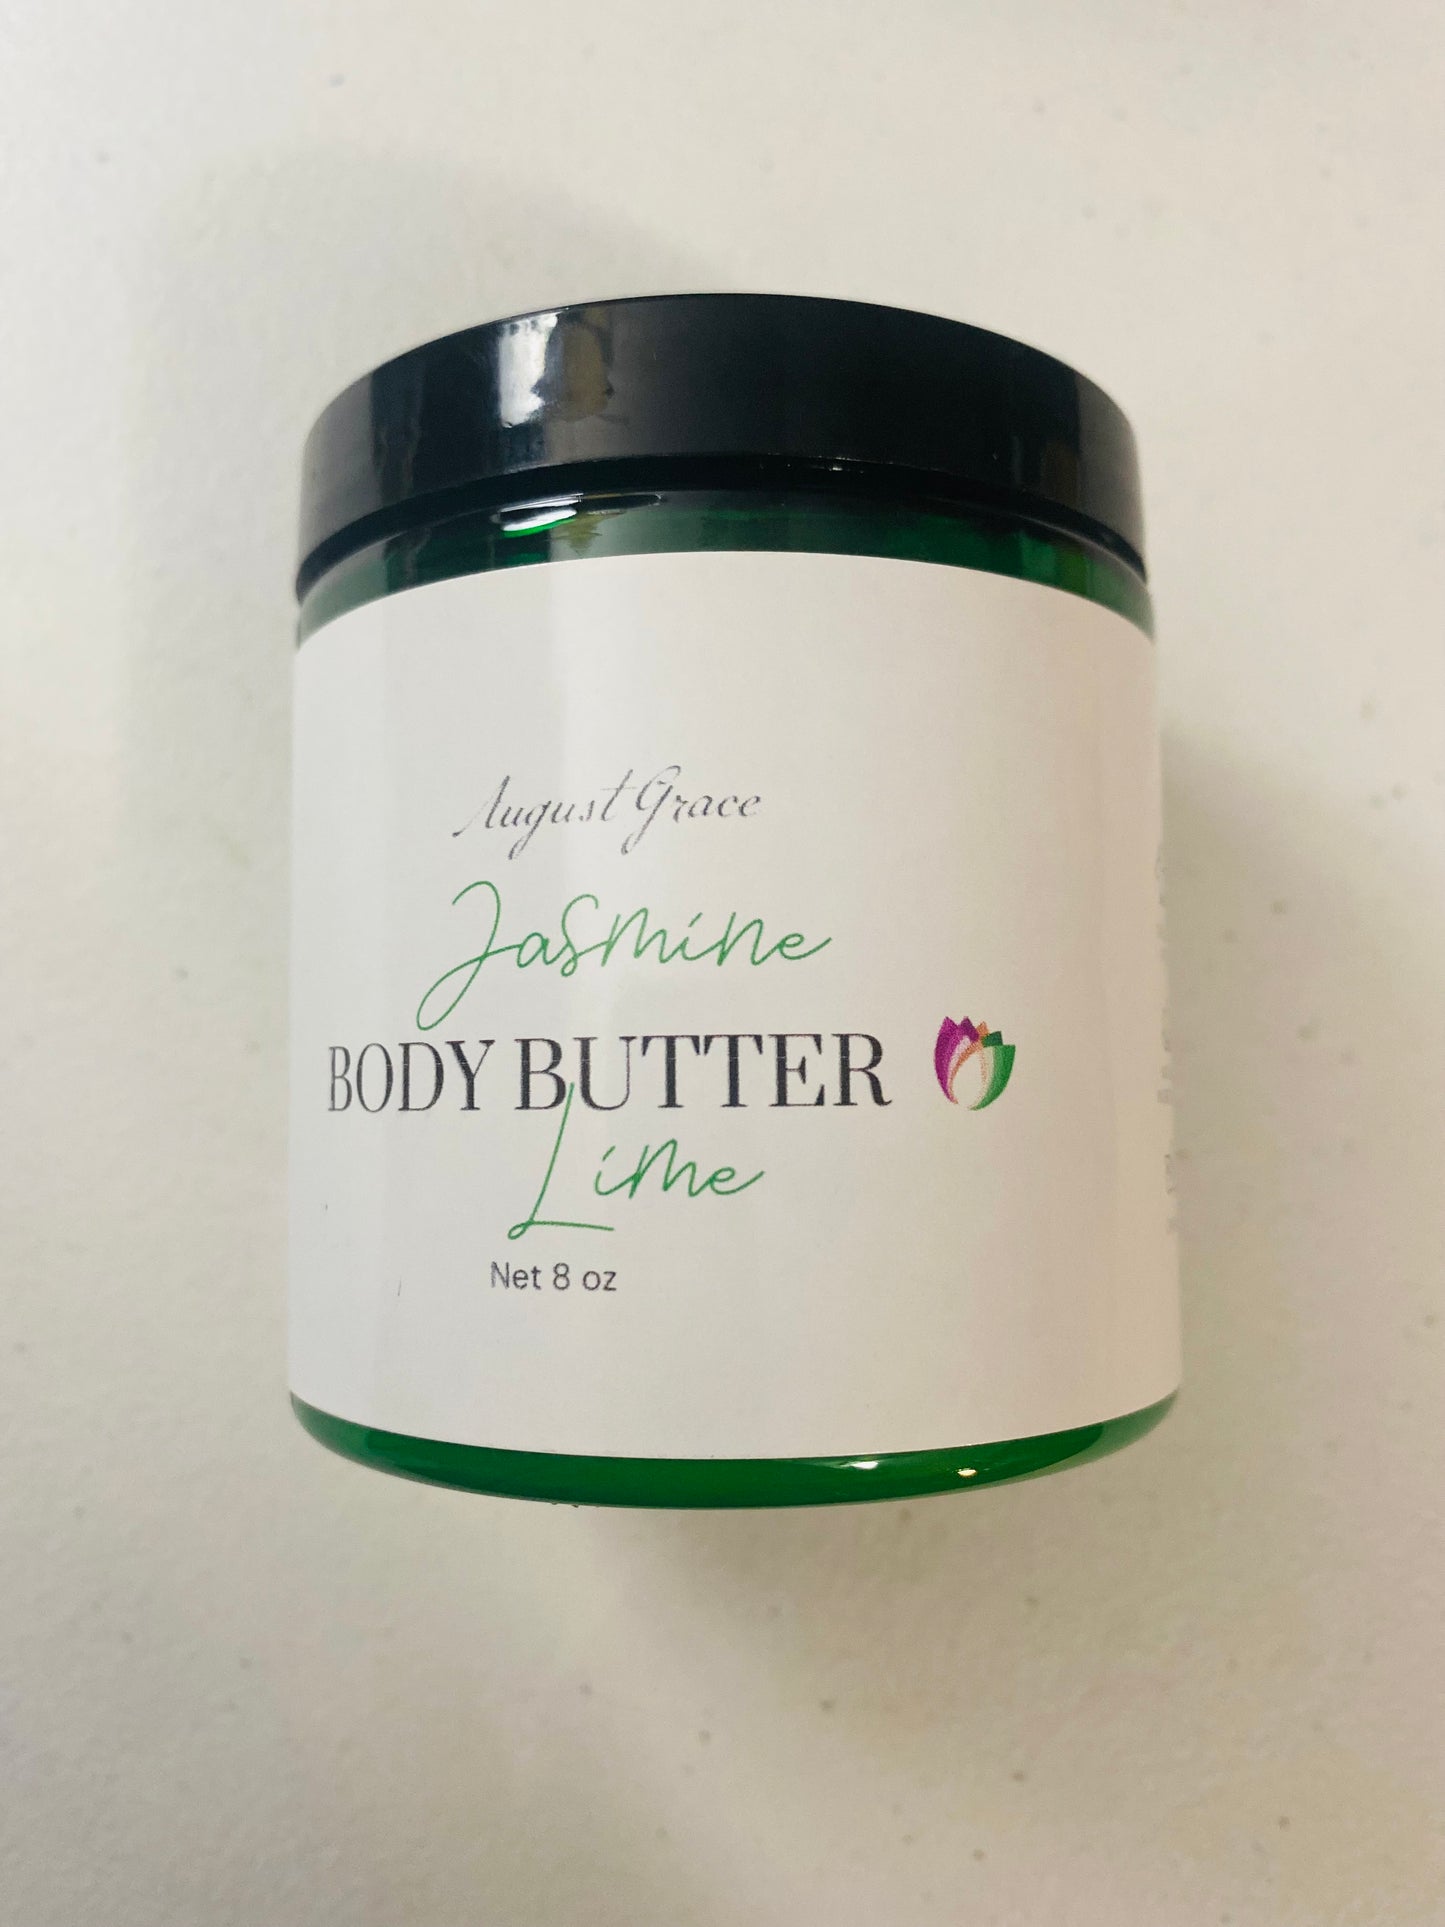 Jasmine Lime Body Butter